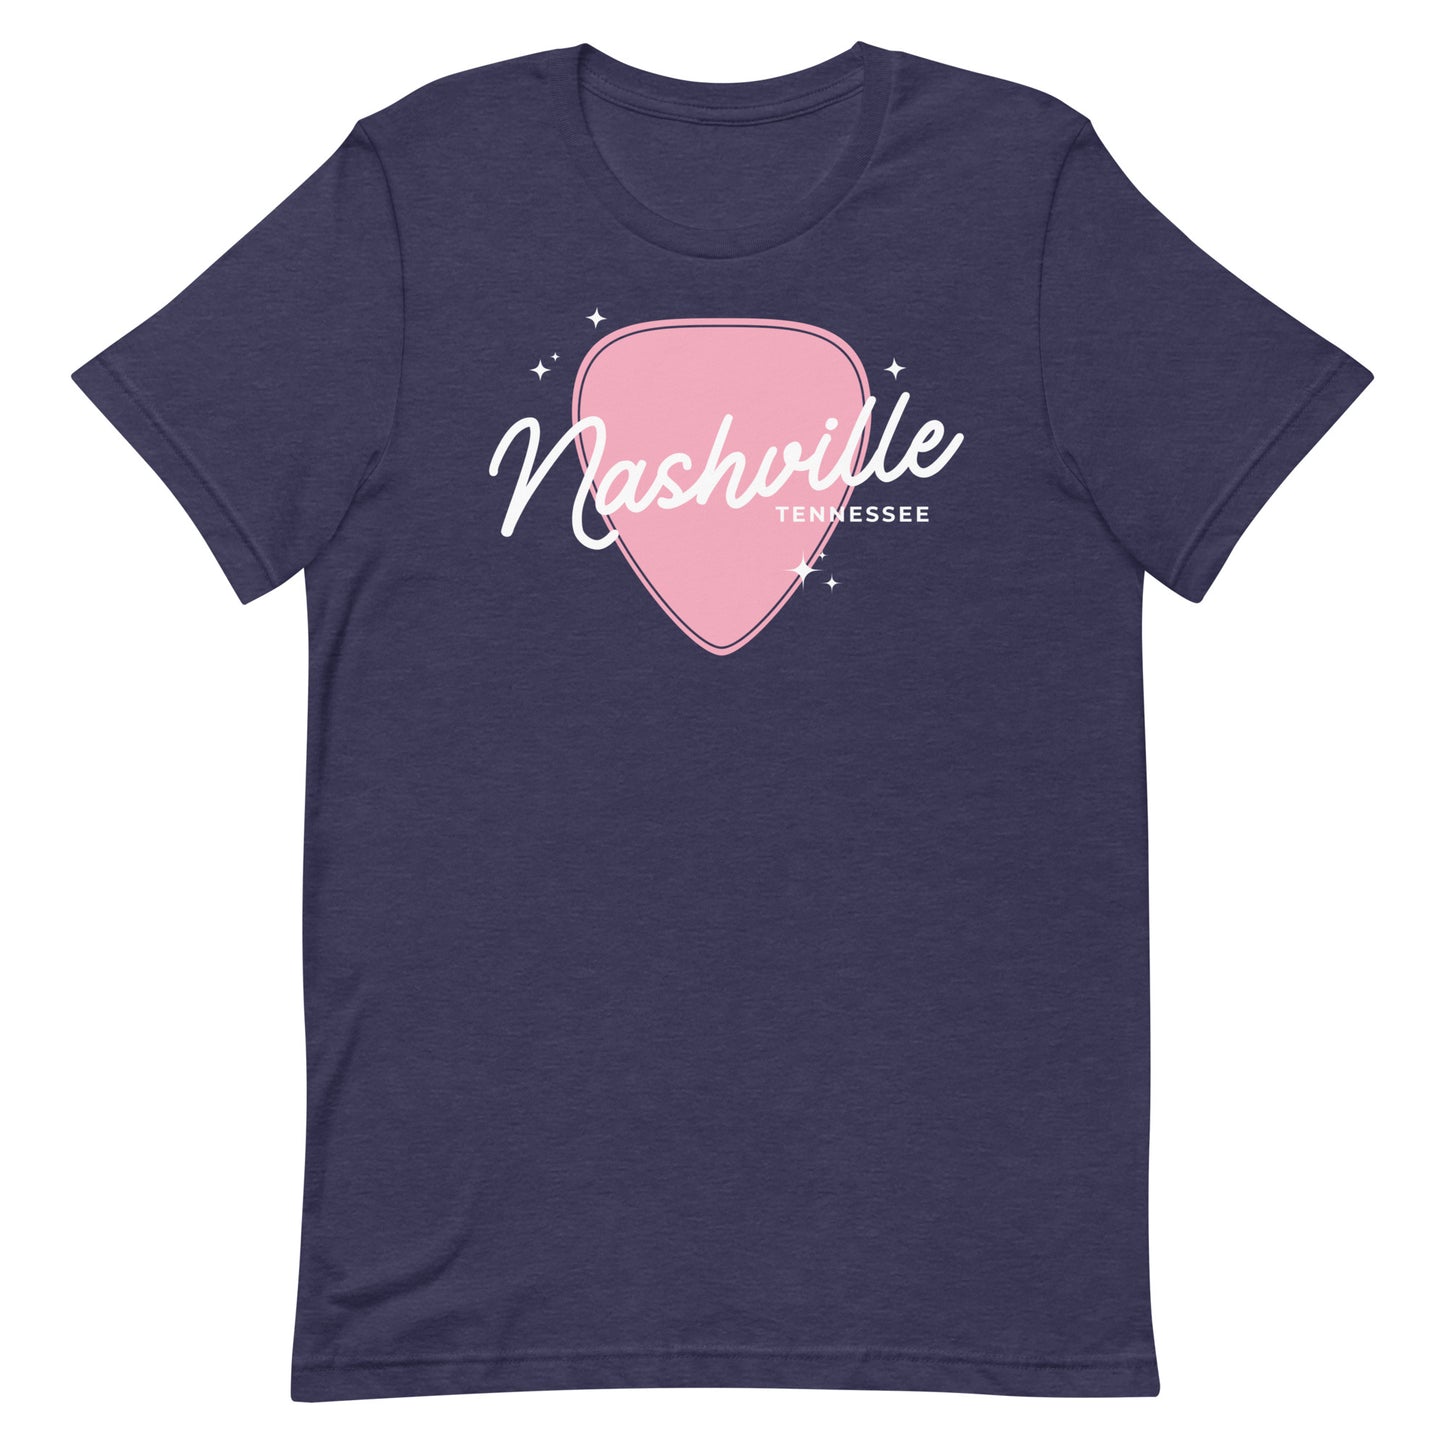 Nashville t-shirt in navy for girls trip